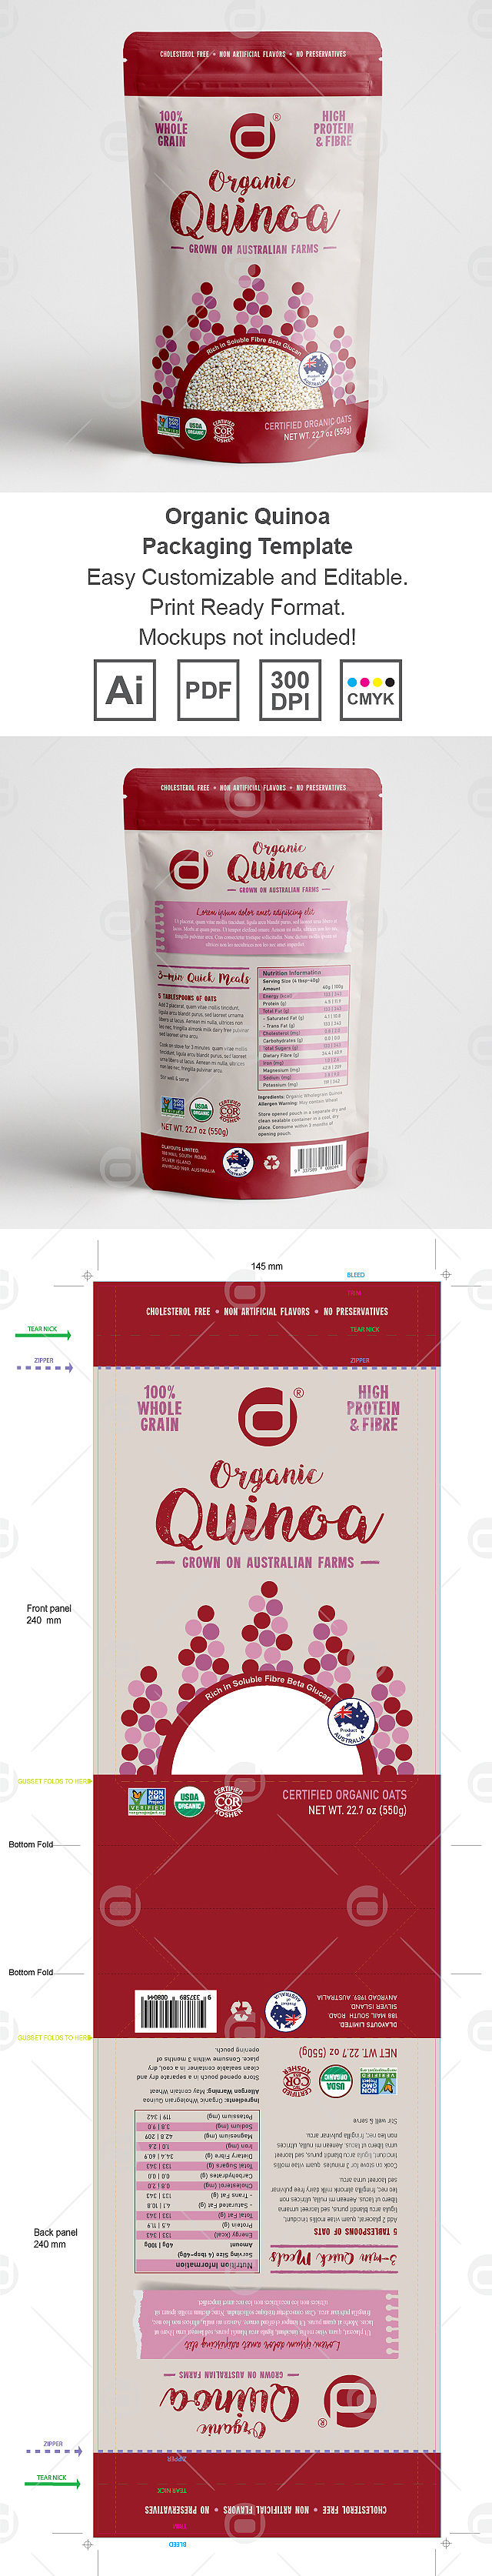 Organic Quinoa Packaging Template